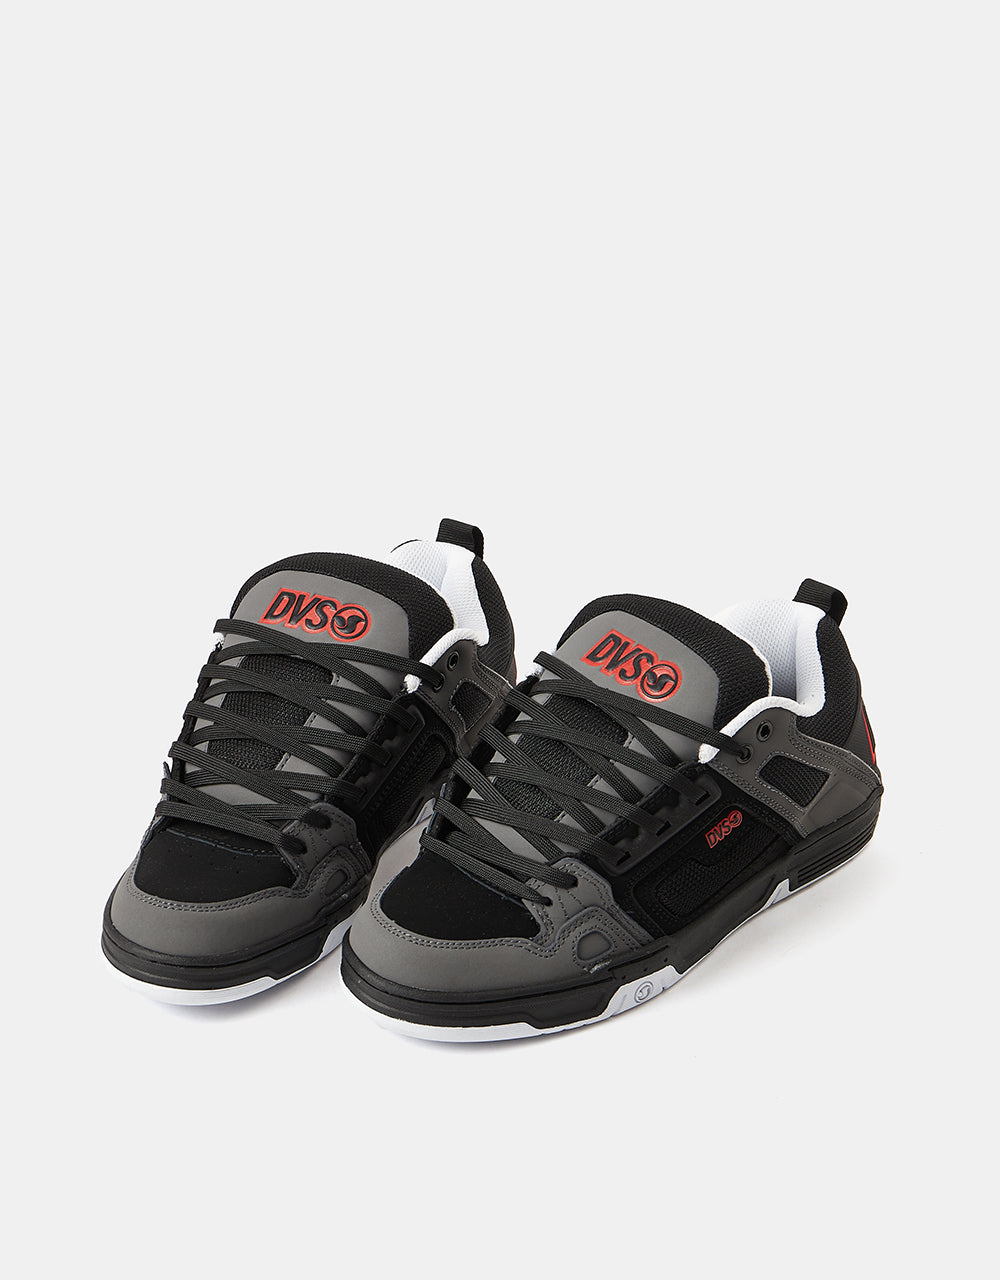 DVS Comanche Skate Shoes - Black/Charcoal/Red Nubuck